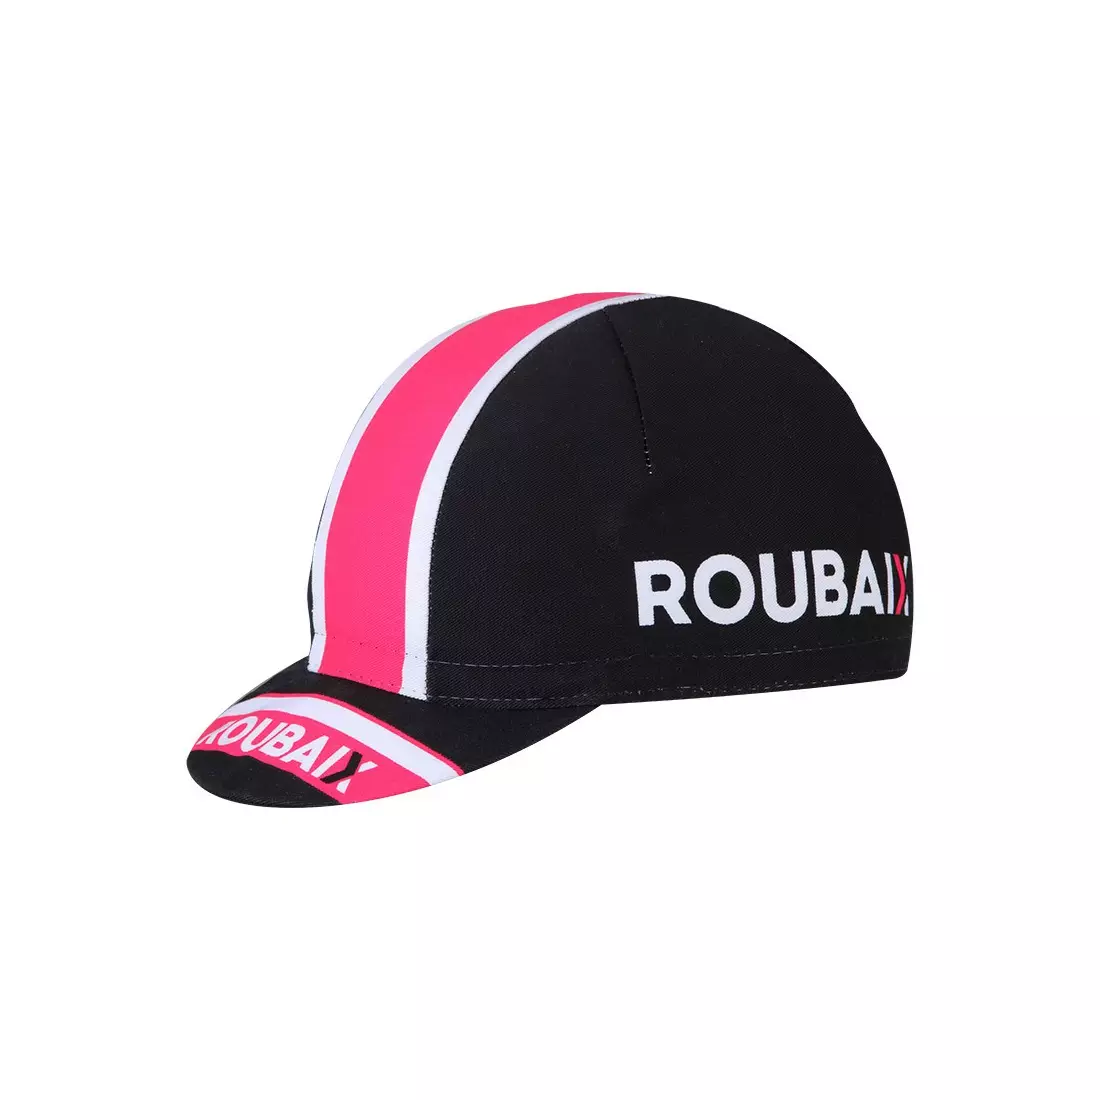 Apis Profi ROUBAIX cycling cap